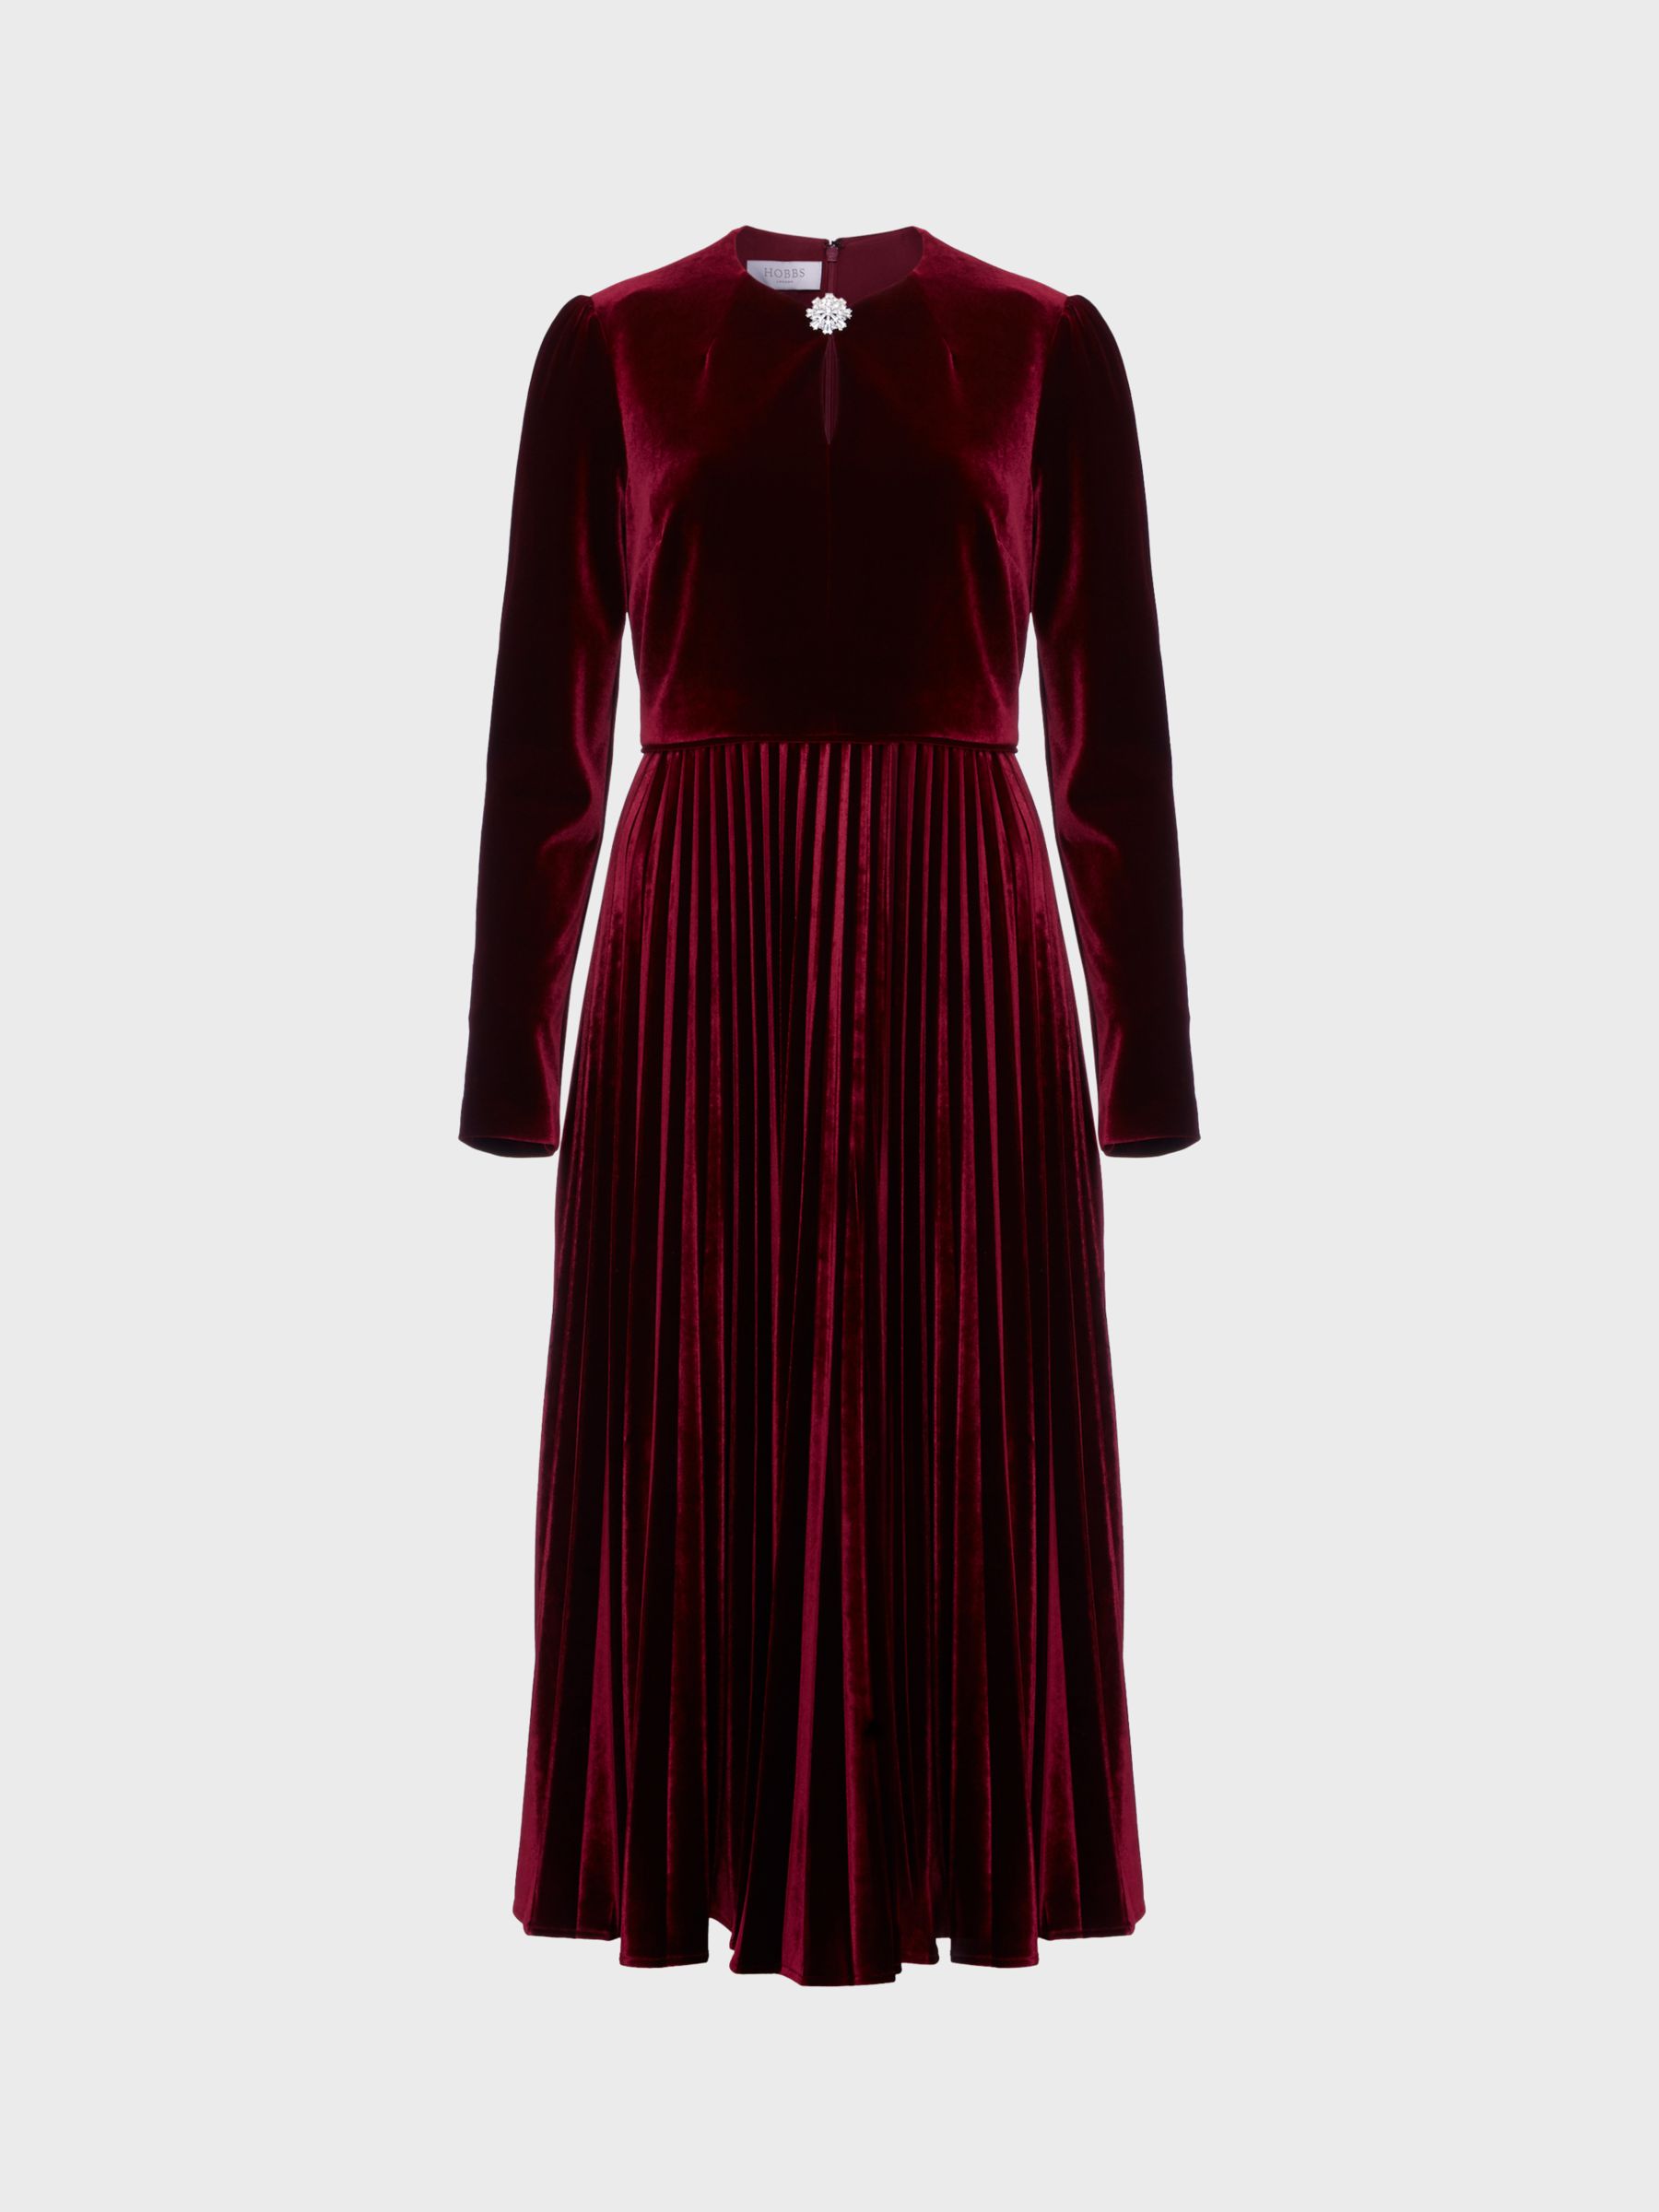 Hobbs Petite Rosalie Dress, Deep Red at John Lewis & Partners